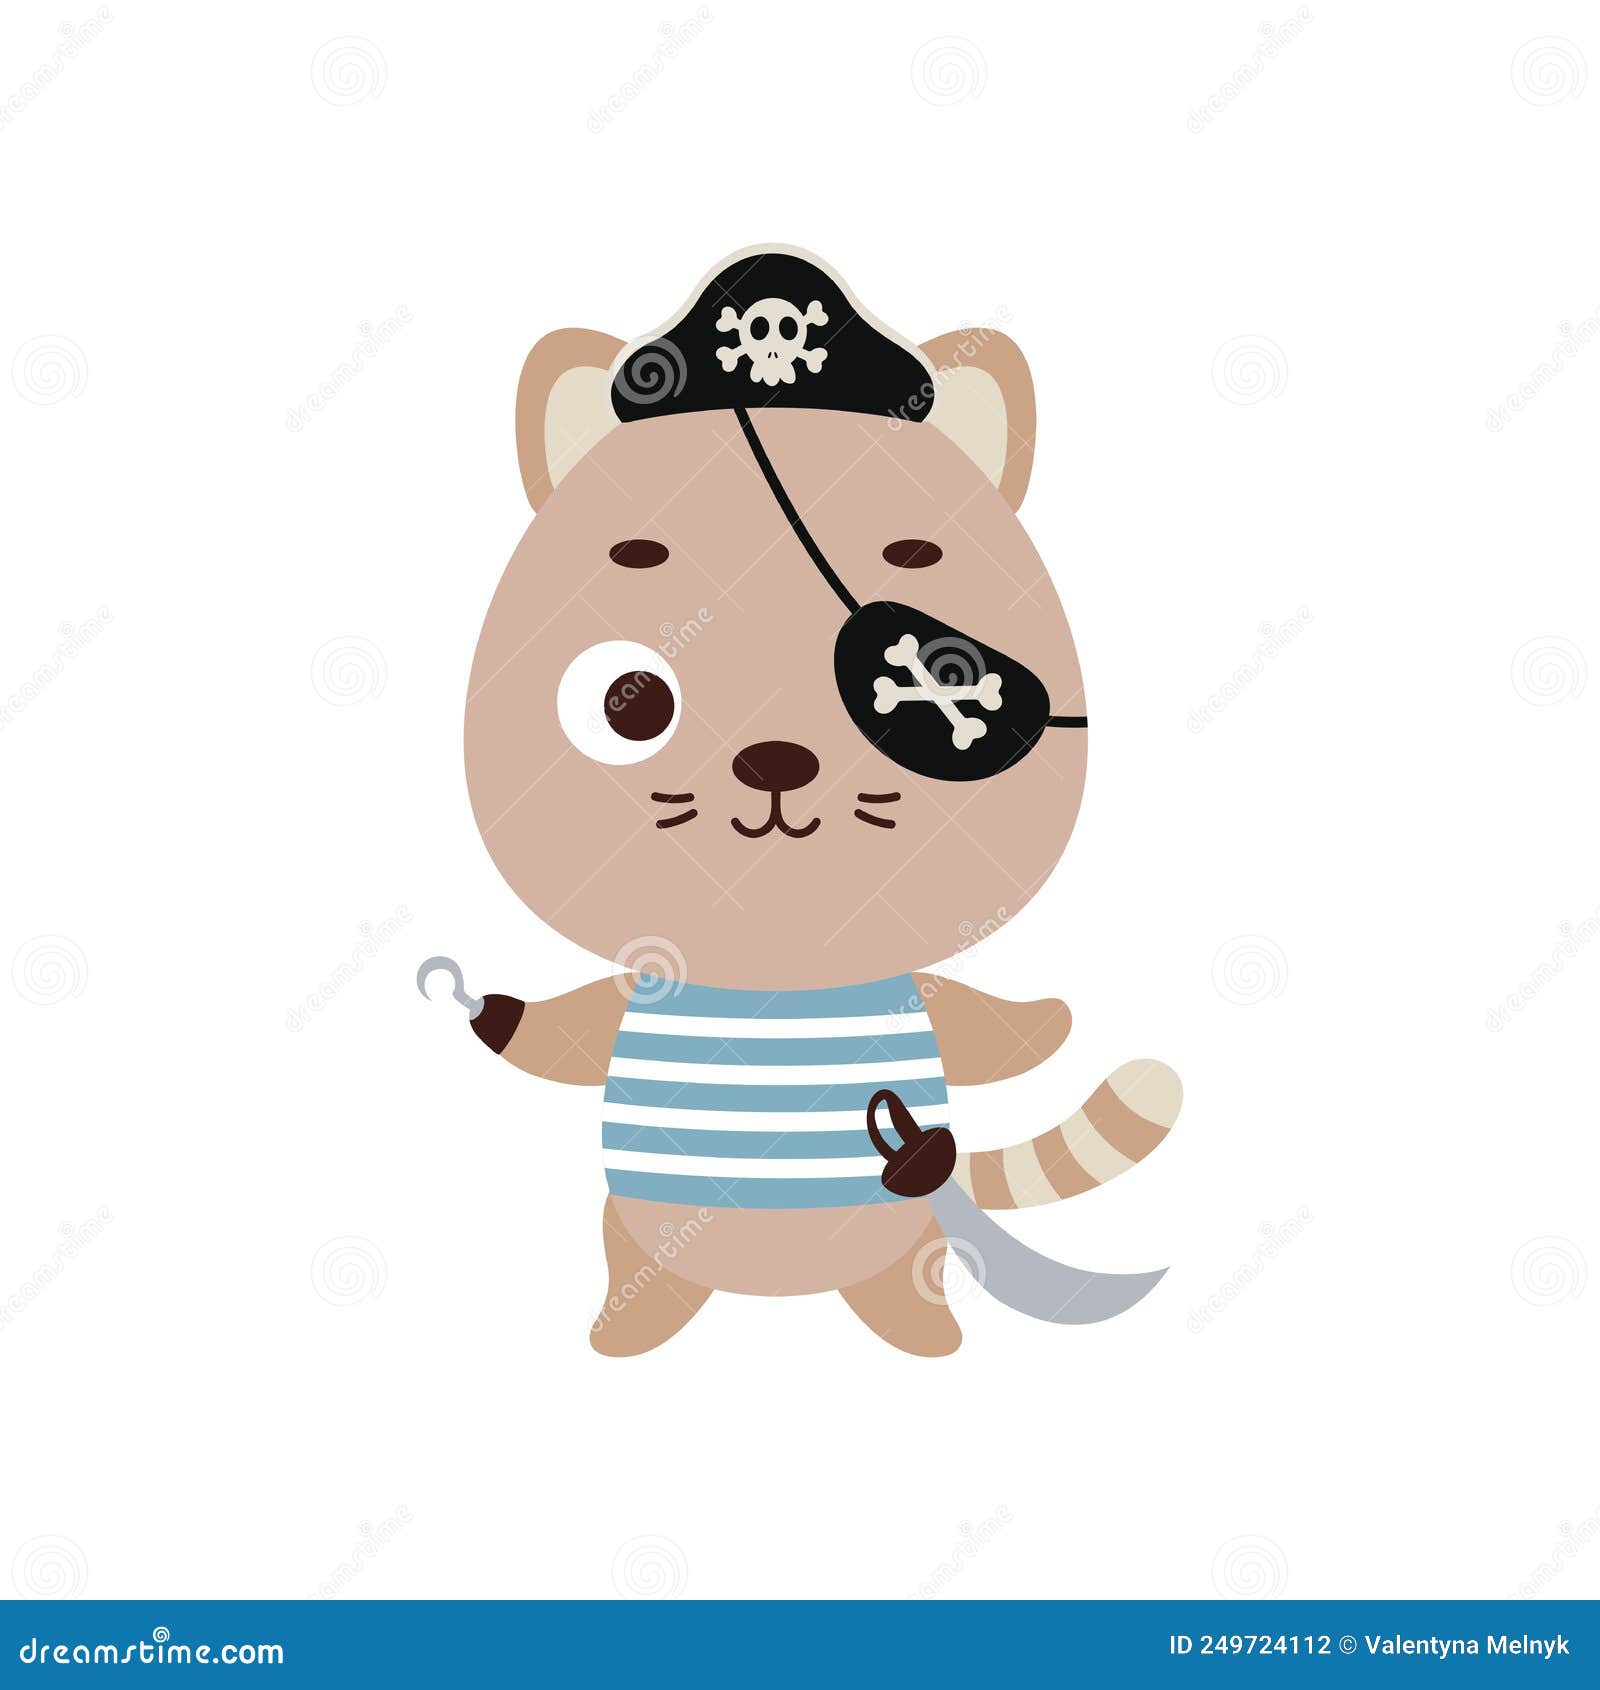 https://thumbs.dreamstime.com/z/cute-little-pirate-cat-hook-blindfold-cartoon-animal-character-kids-t-shirts-nursery-decoration-baby-shower-cute-249724112.jpg